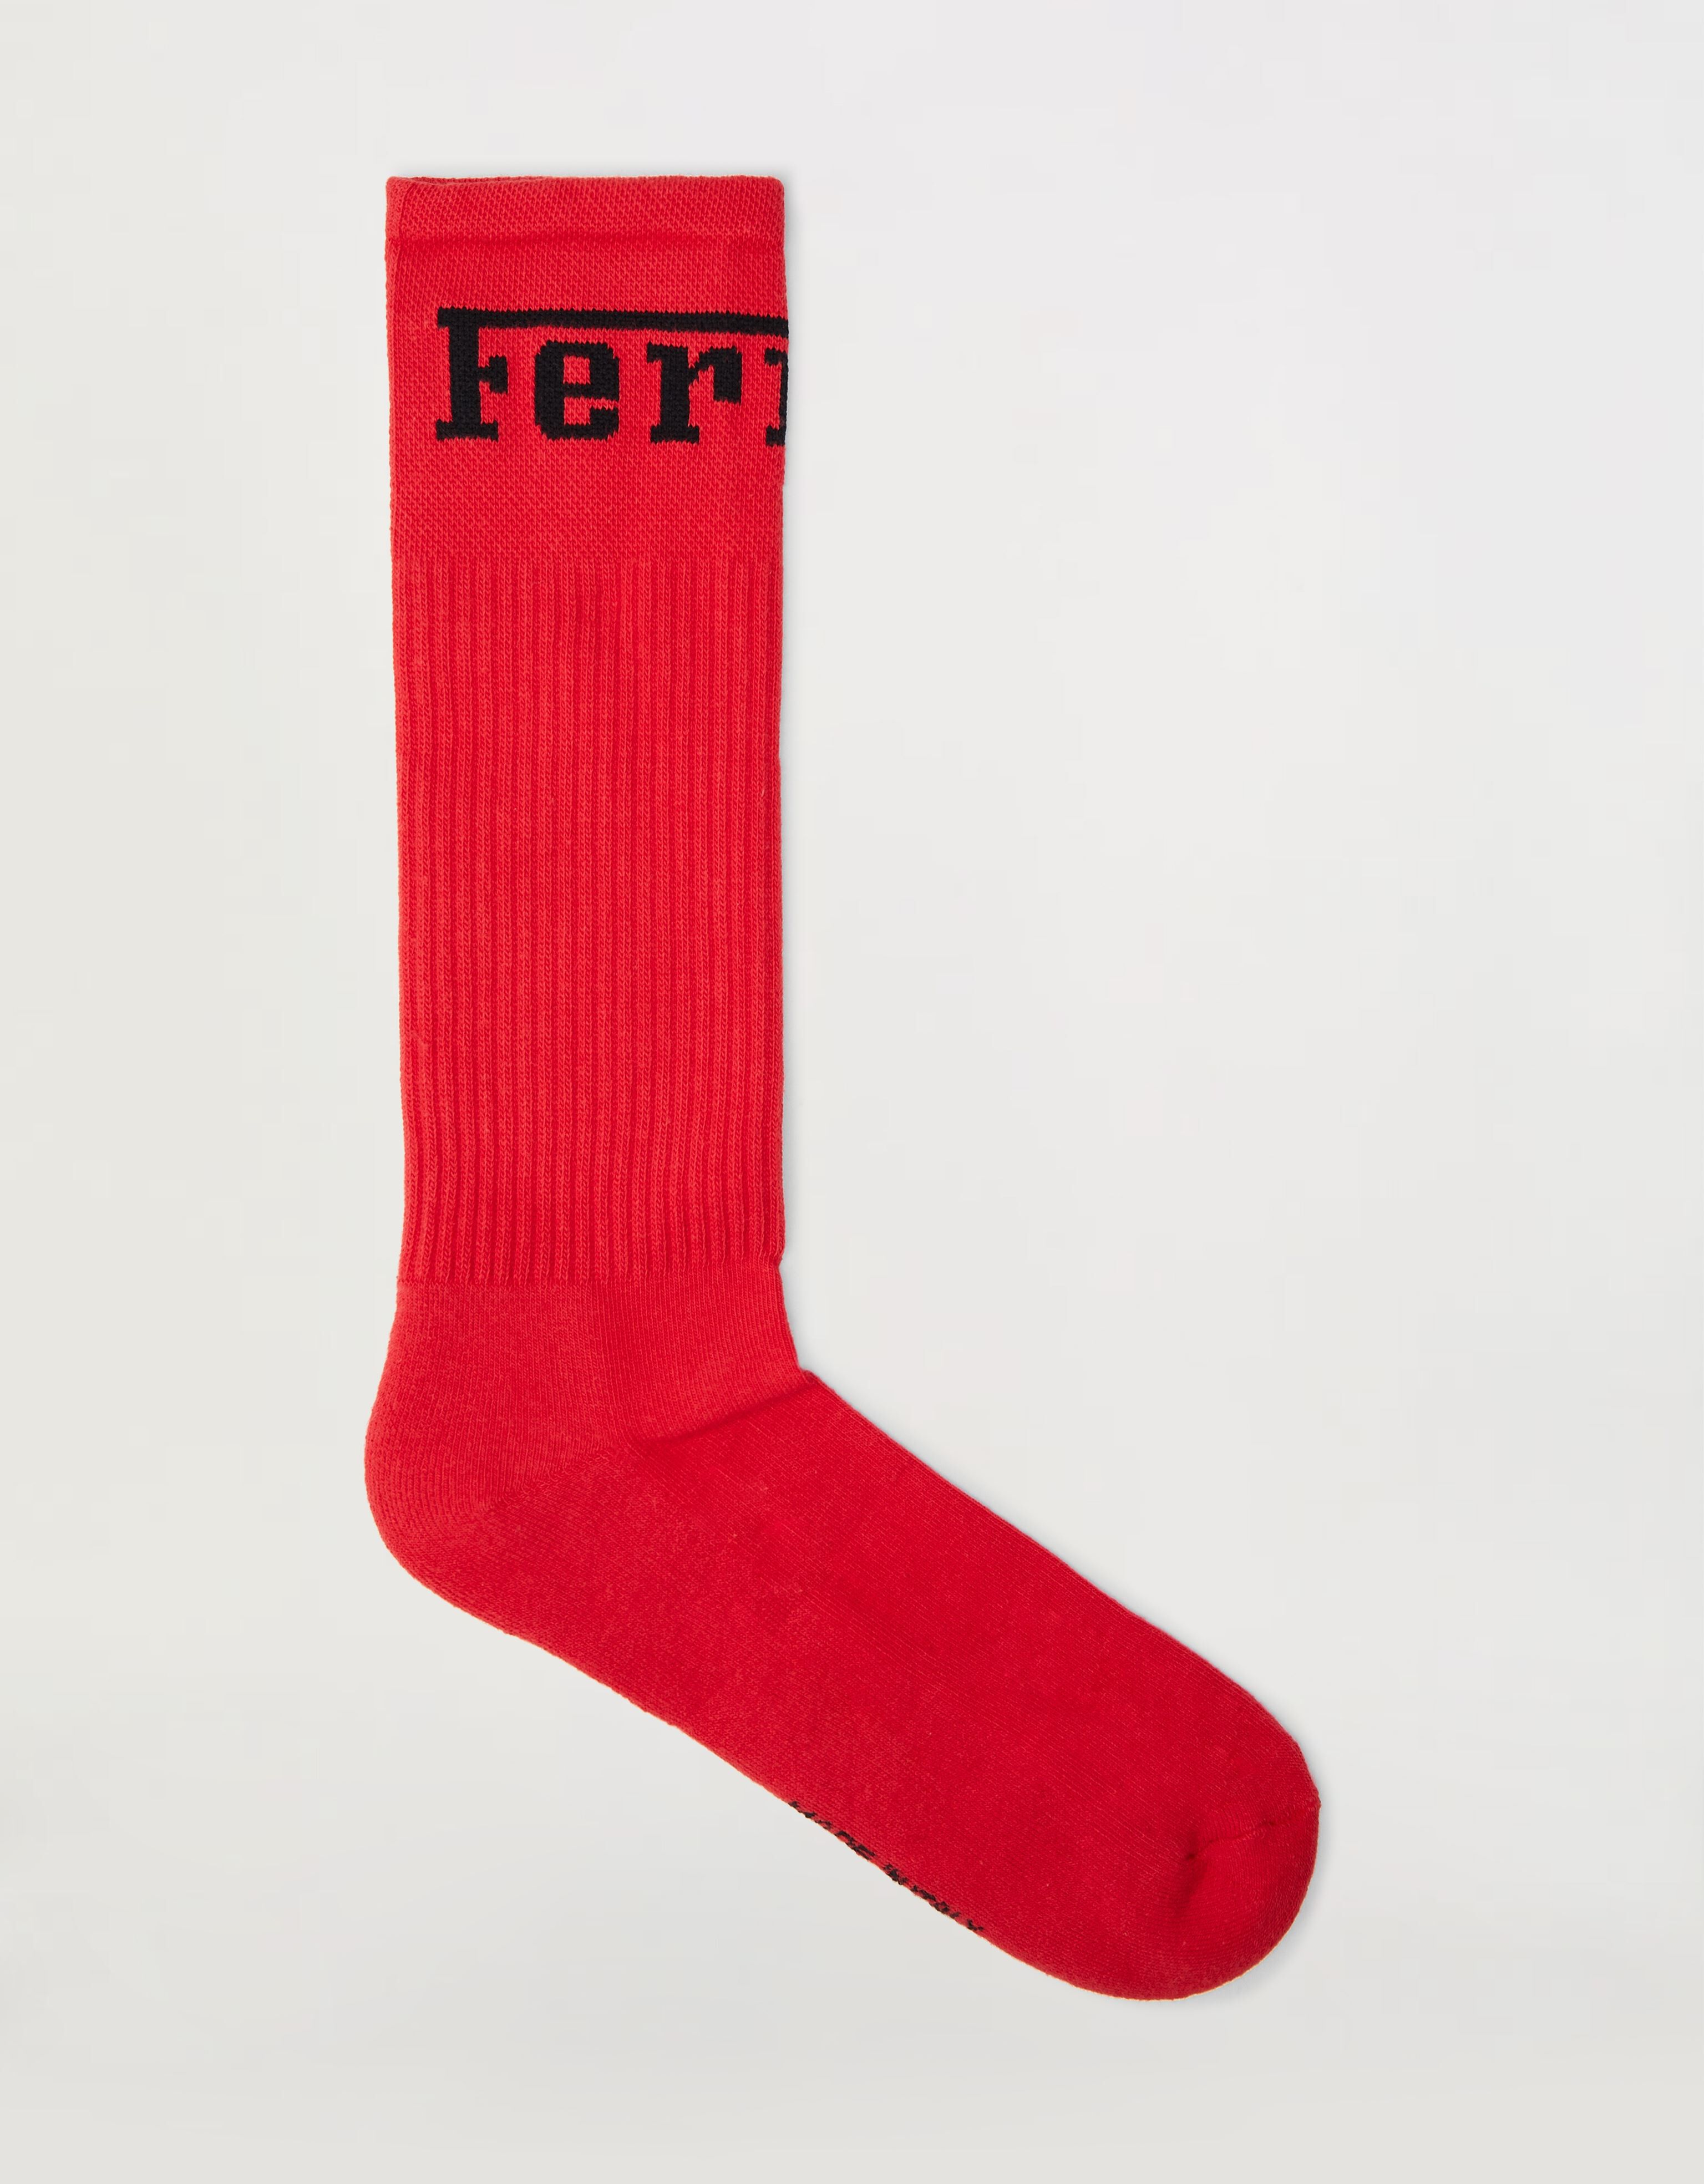 Ferrari Socken aus Baumwollmischung mit Ferrari-Logo Rot 20007f